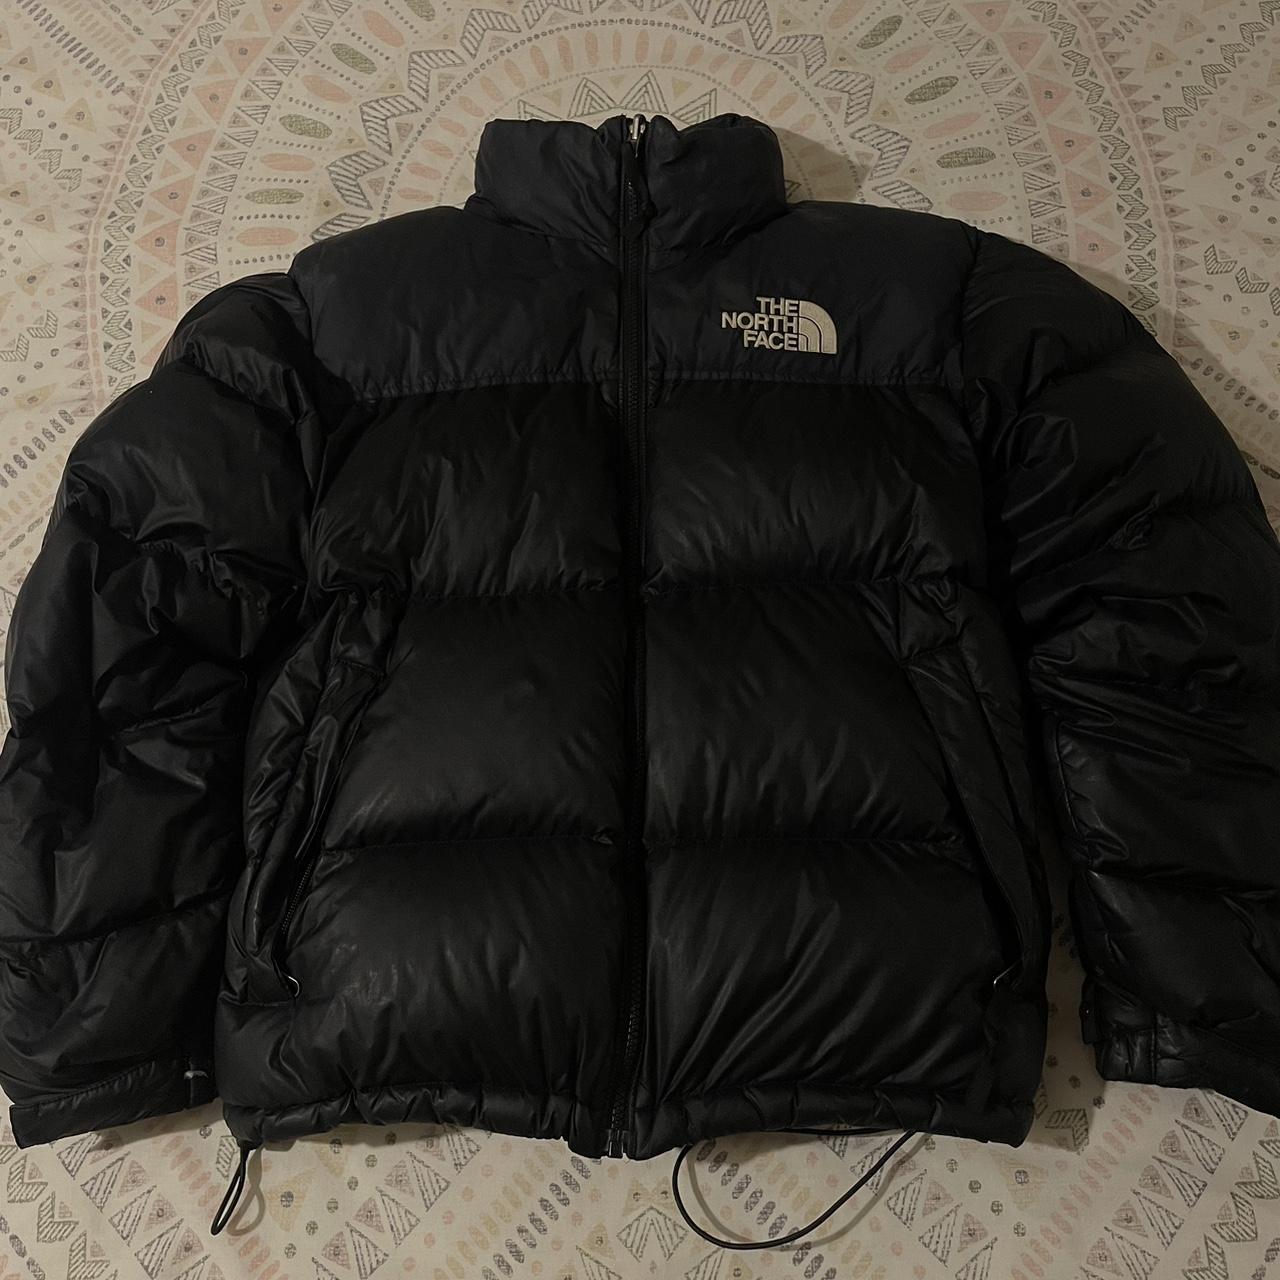 The North Face Retro 1996 Puffer Jacket Black... - Depop